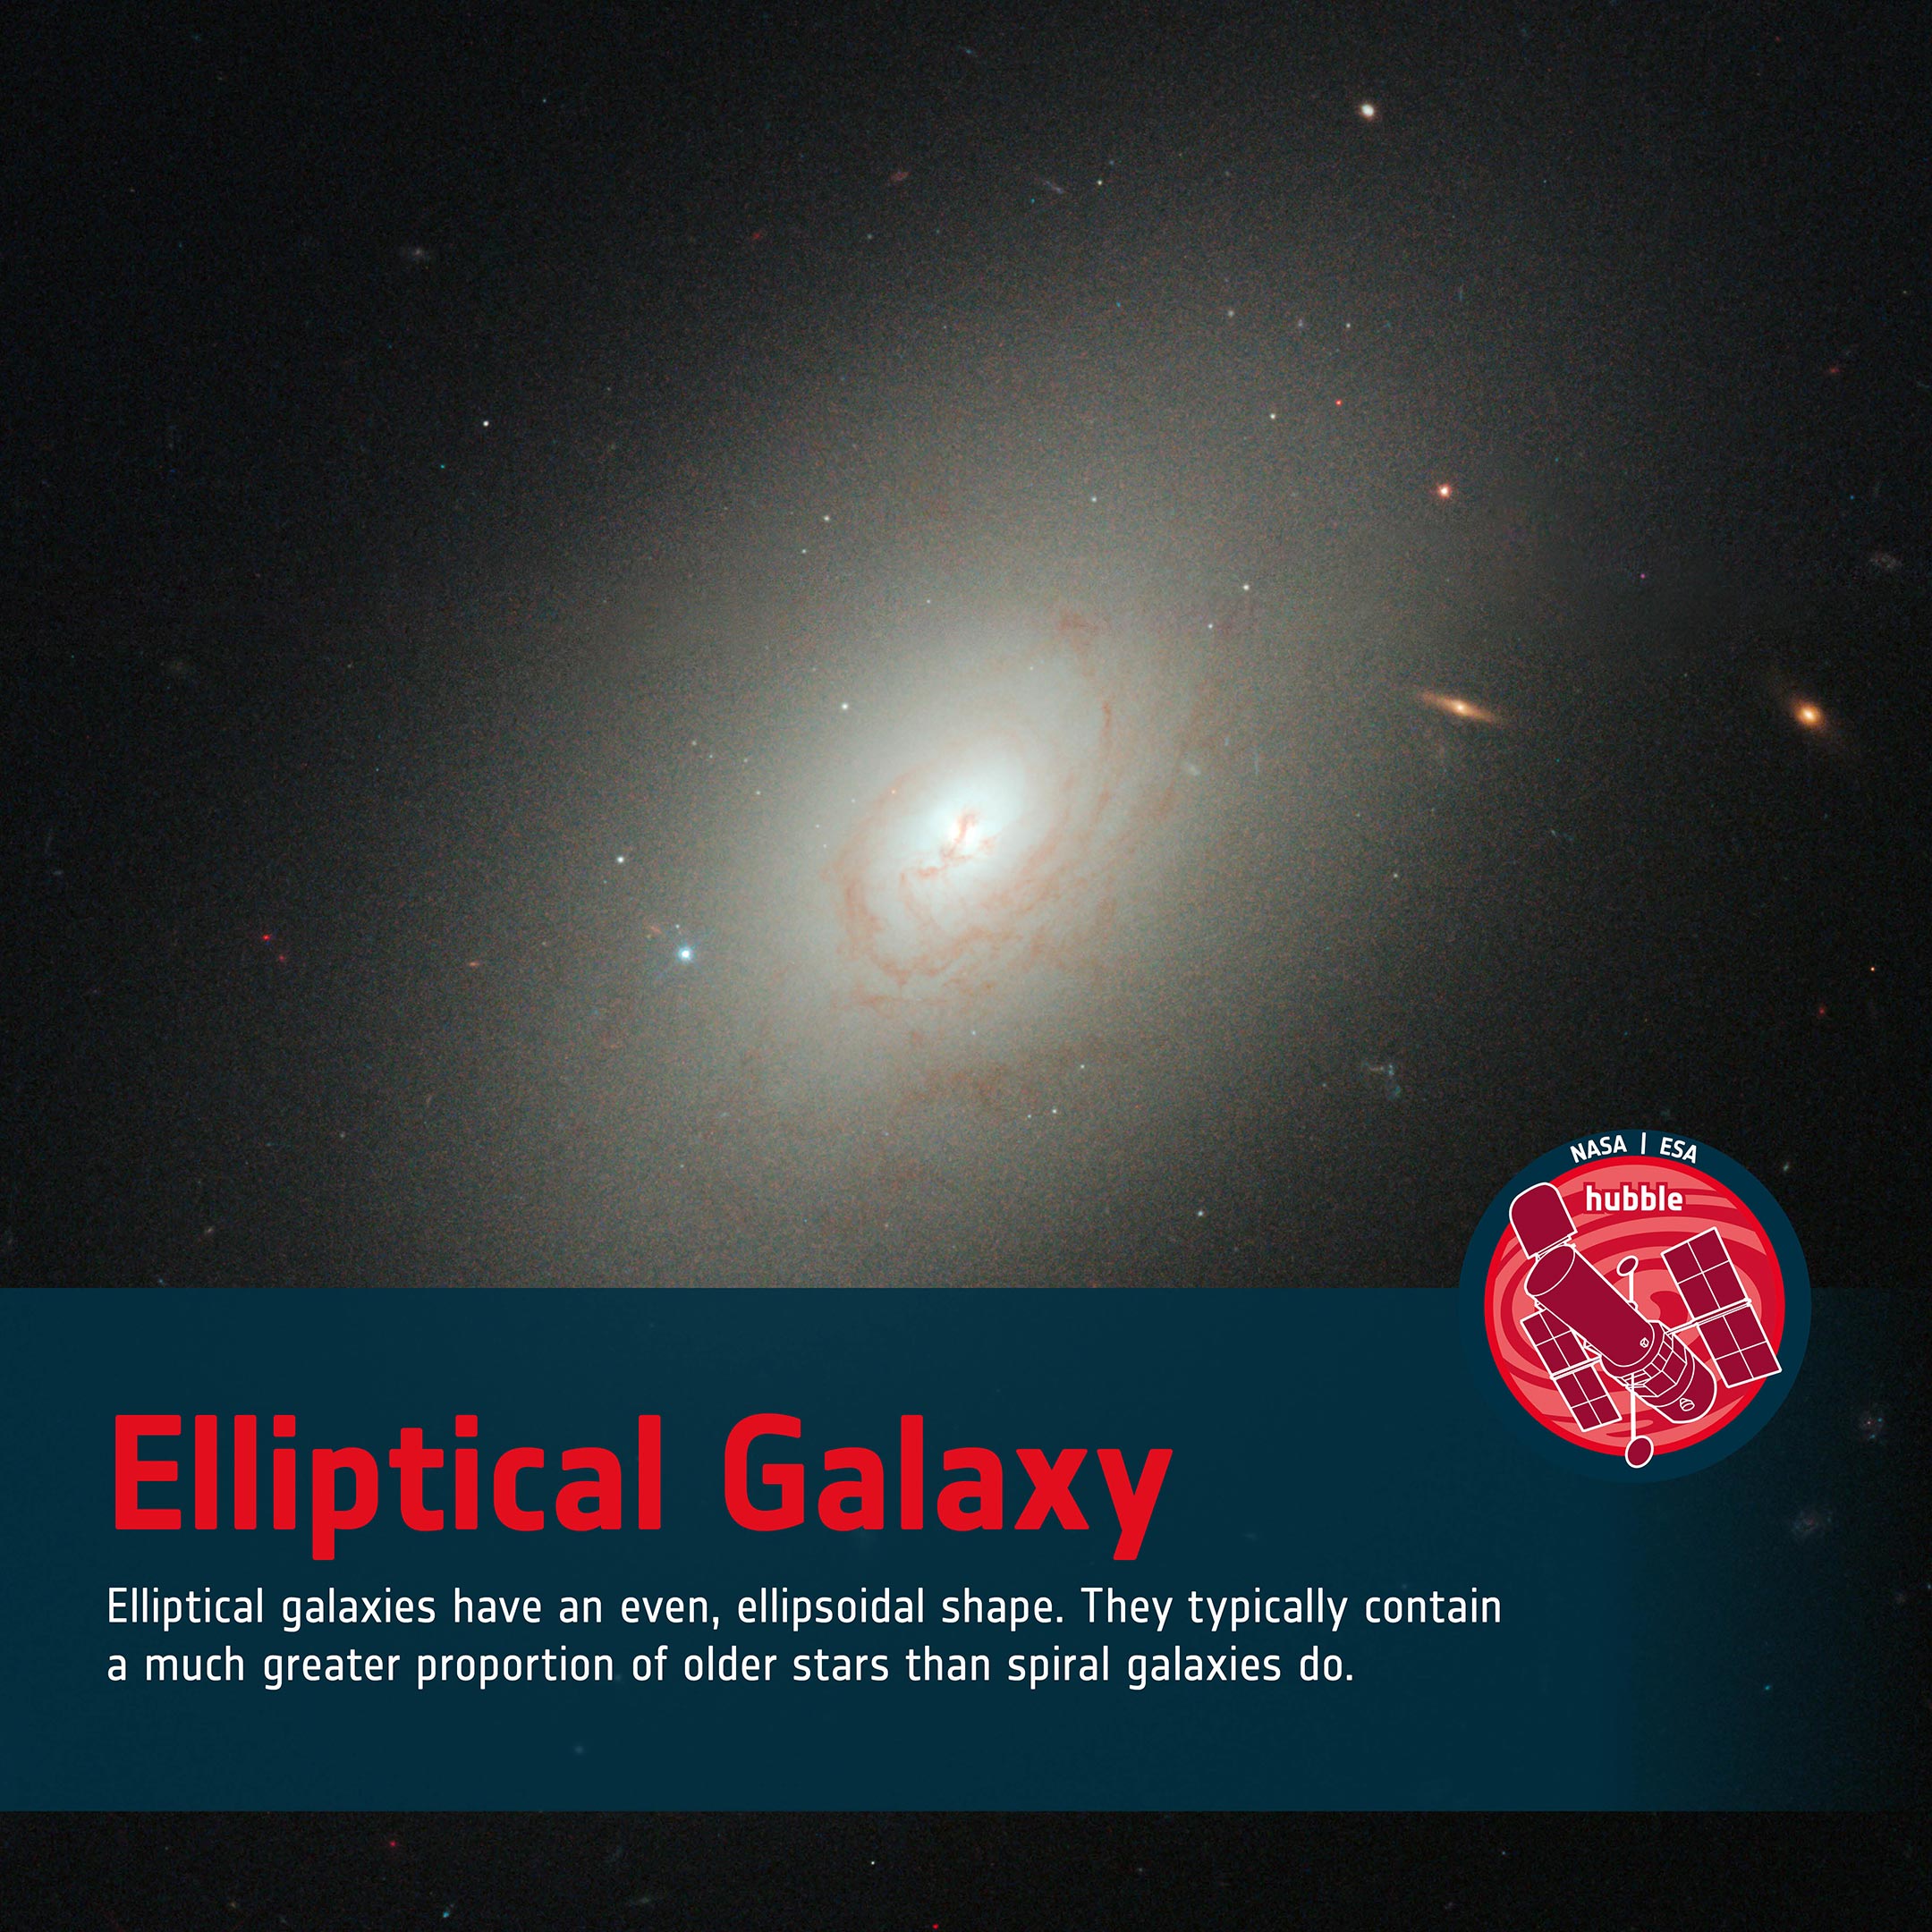 giant elliptical galaxies